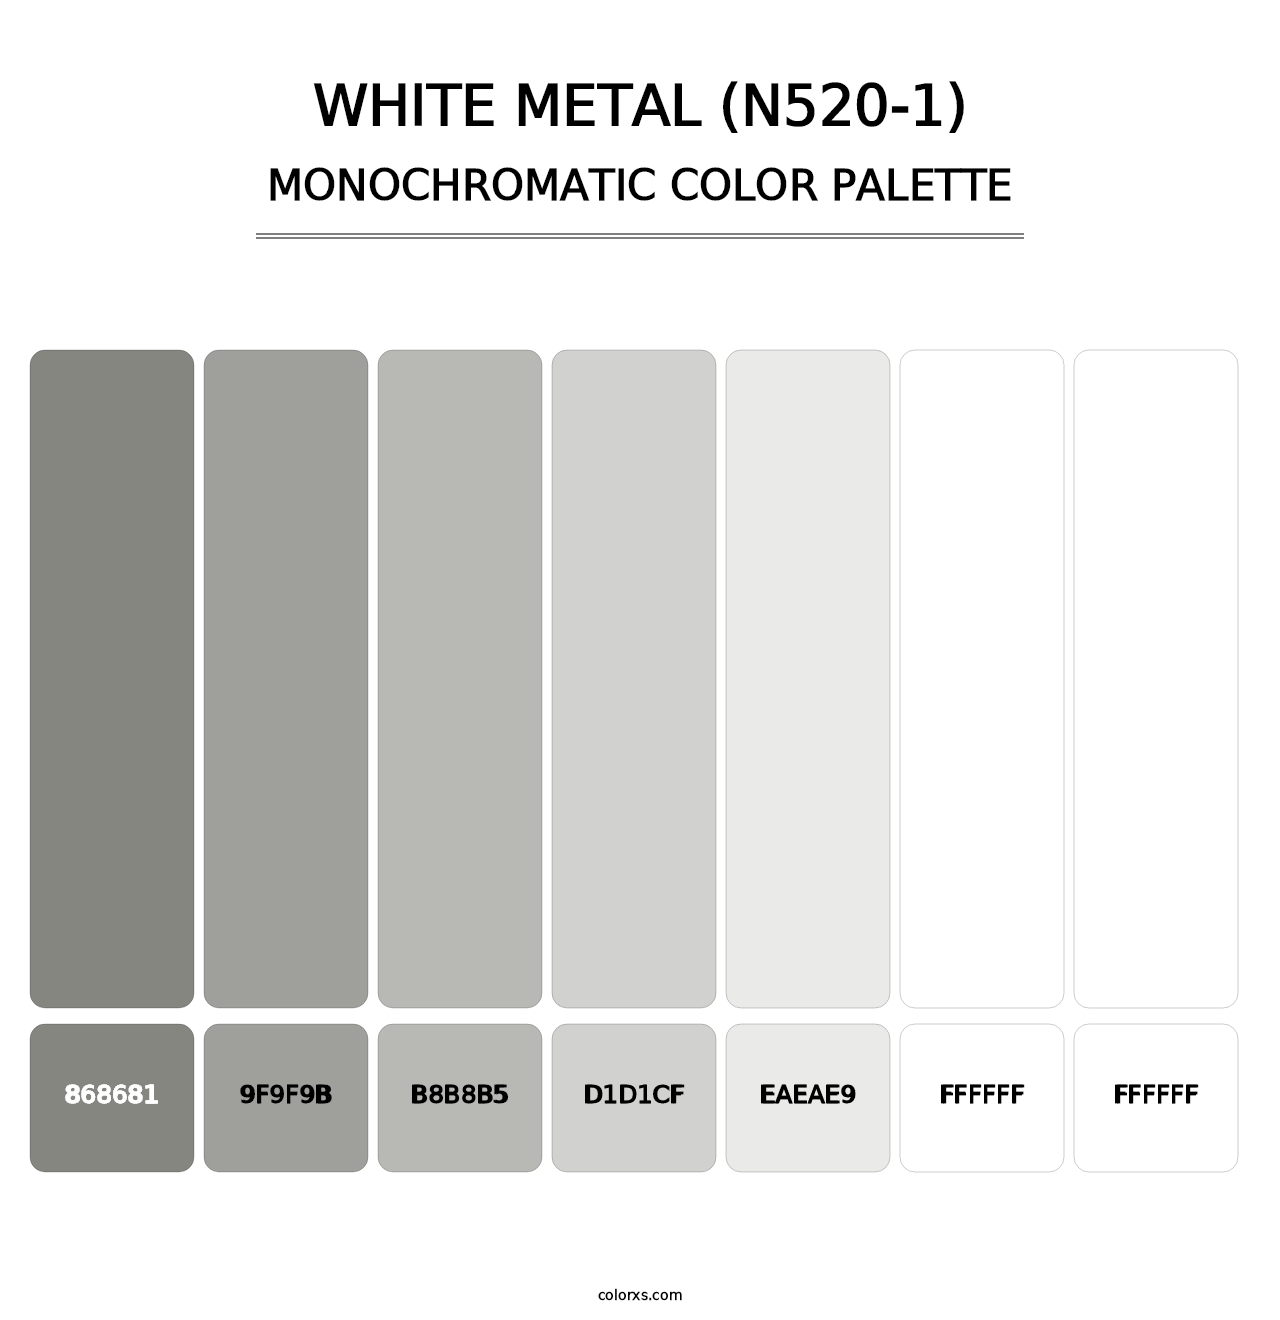 White Metal (N520-1) - Monochromatic Color Palette